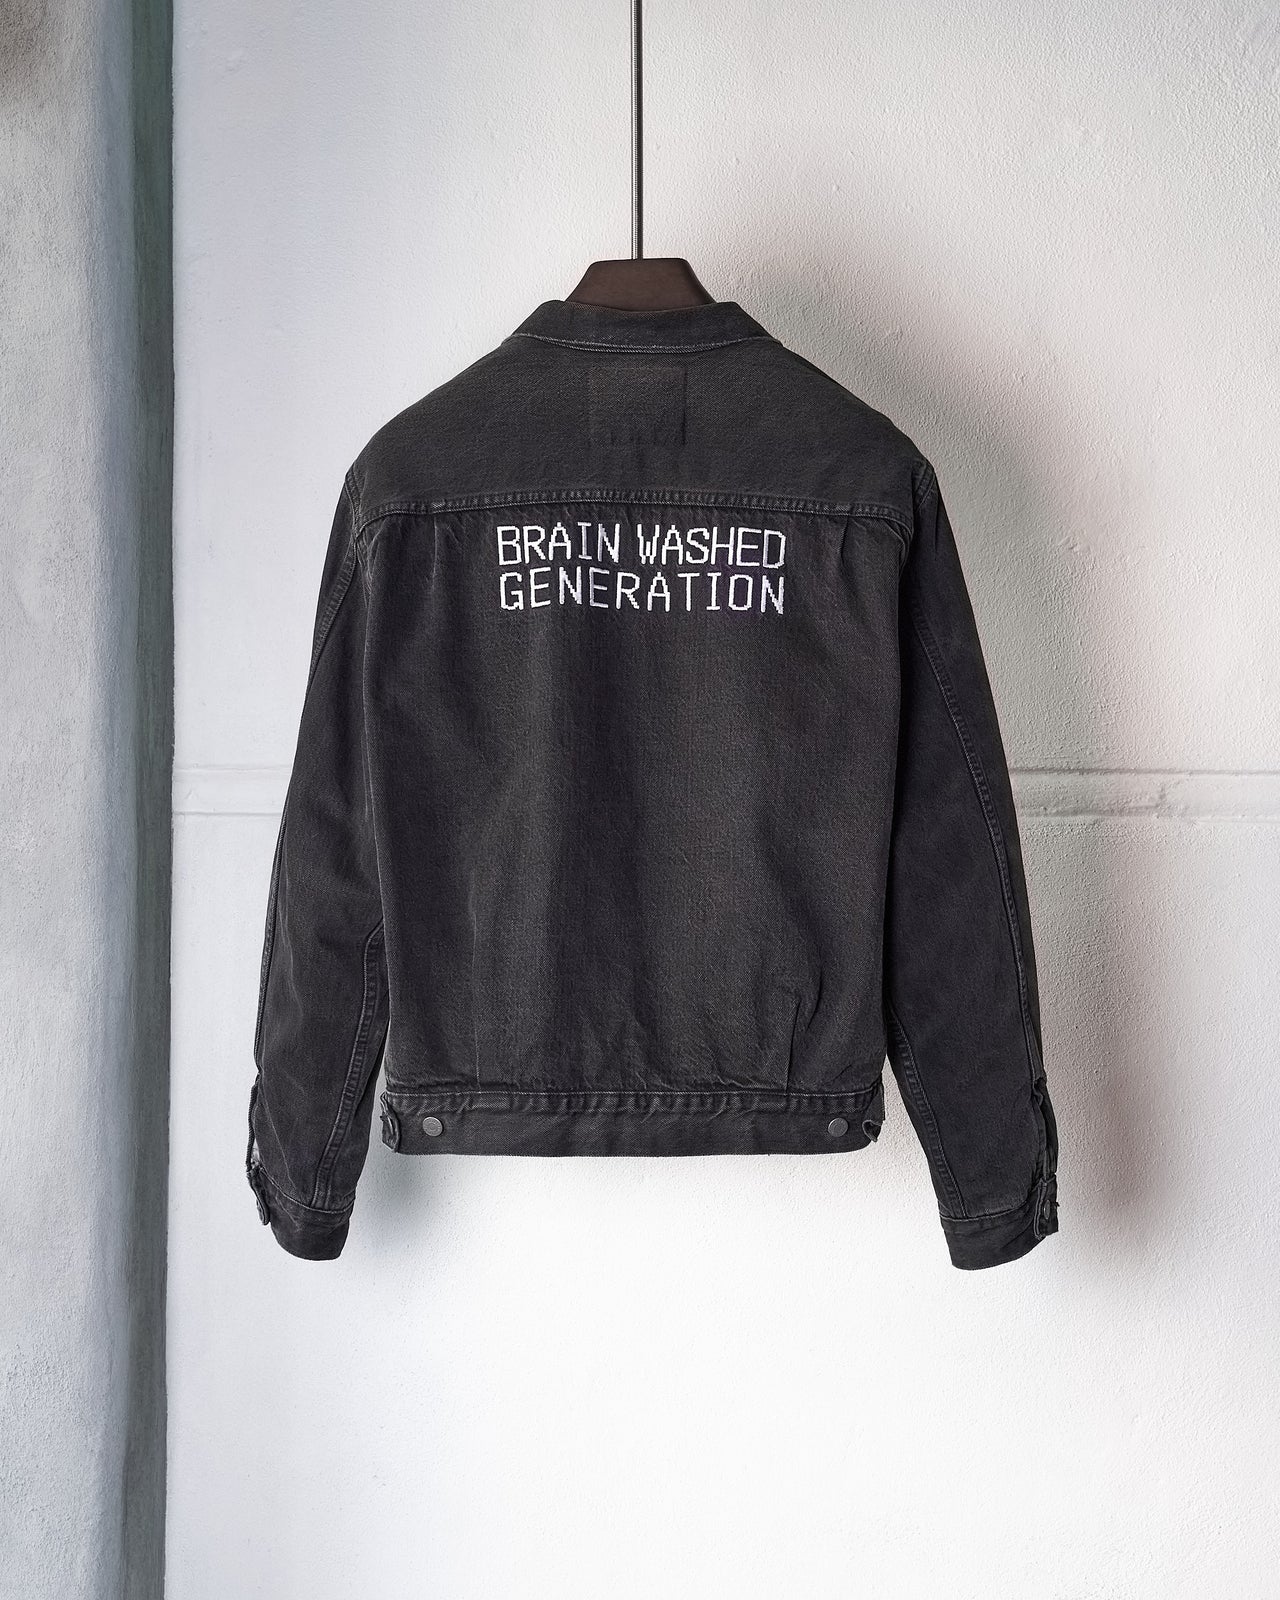 Undercover "Brainwashed Generation" denim jacket